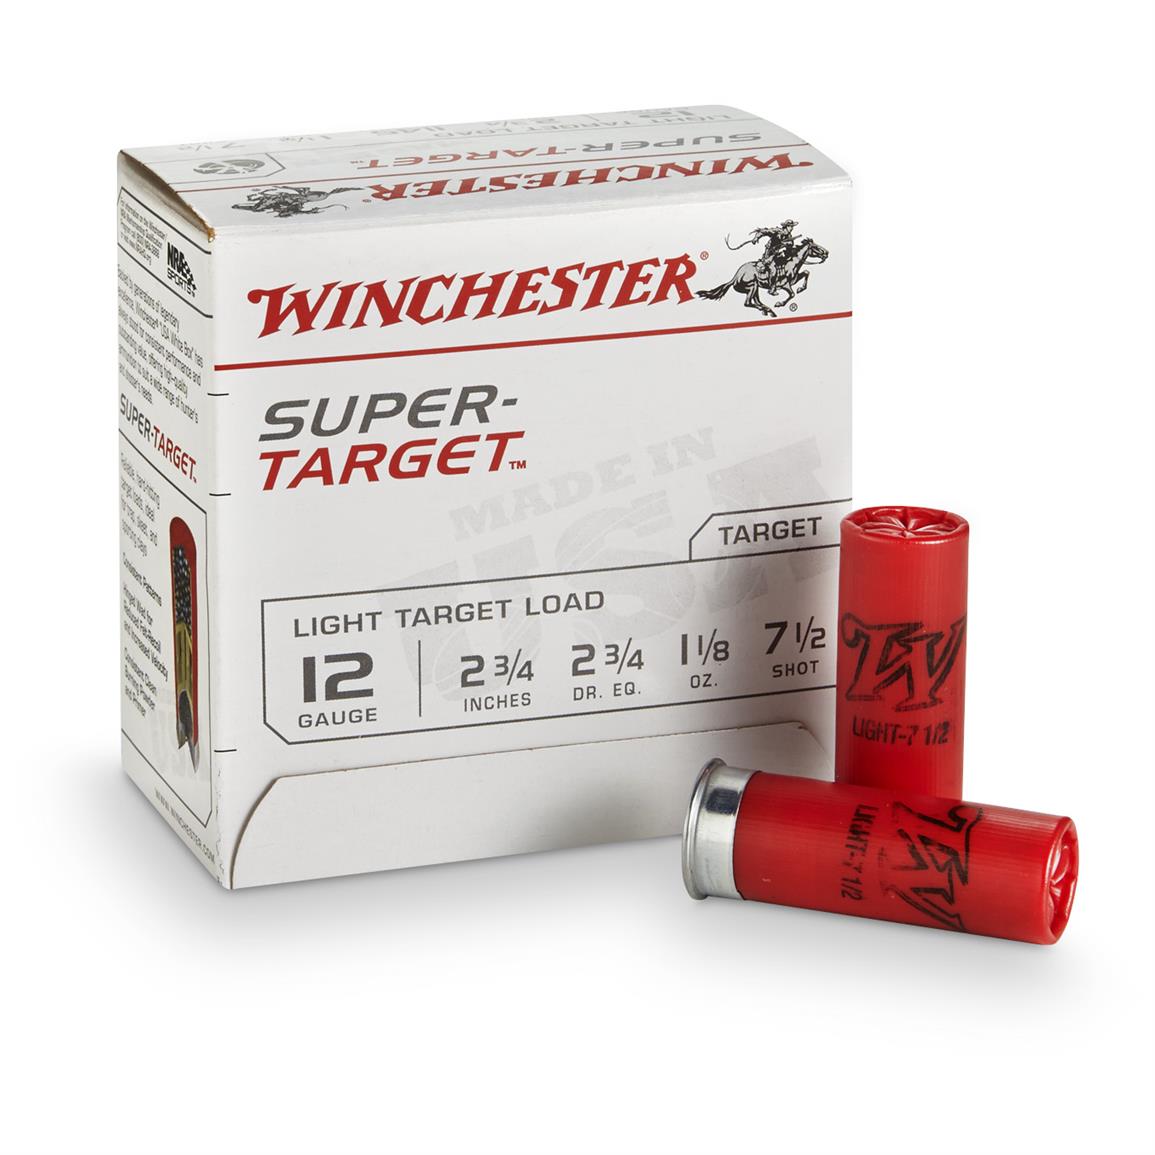 Winchester Super Target Ammo, 12 Gauge, 2 3/4", 1 1/8 ounce shot, 25 Rounds